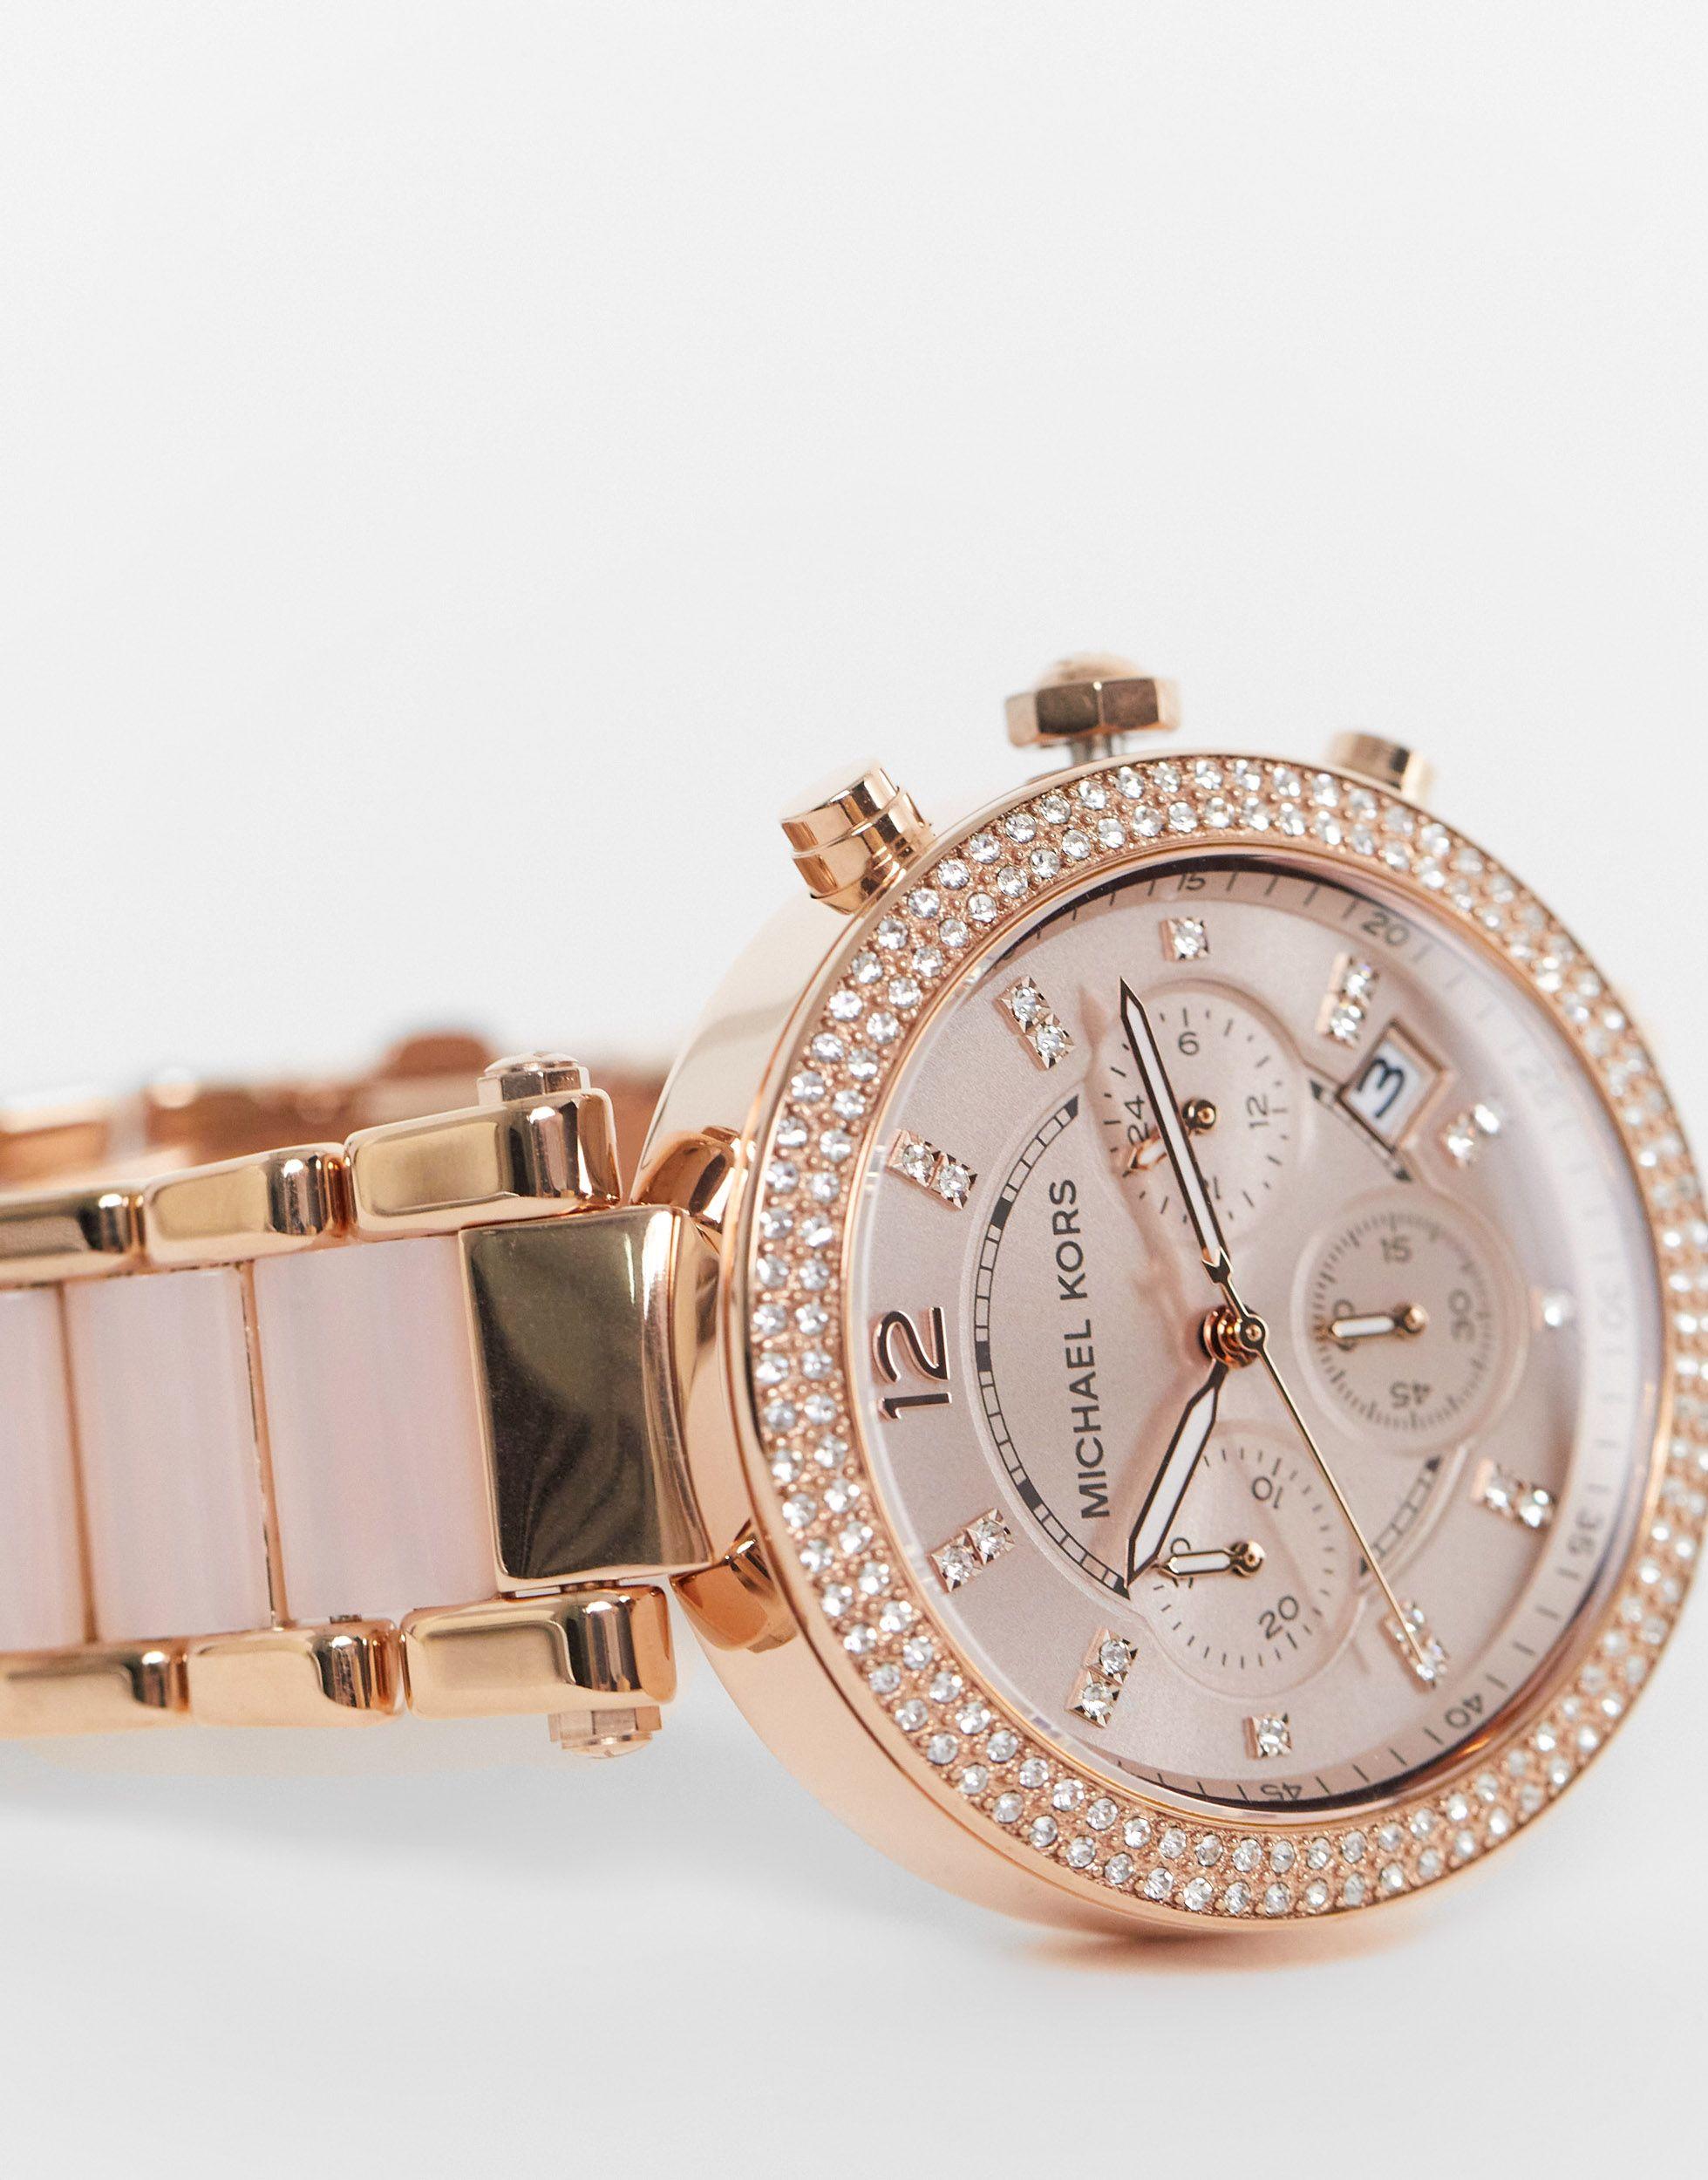 Michael Kors Gold Watch with Light Pink Face  eBay